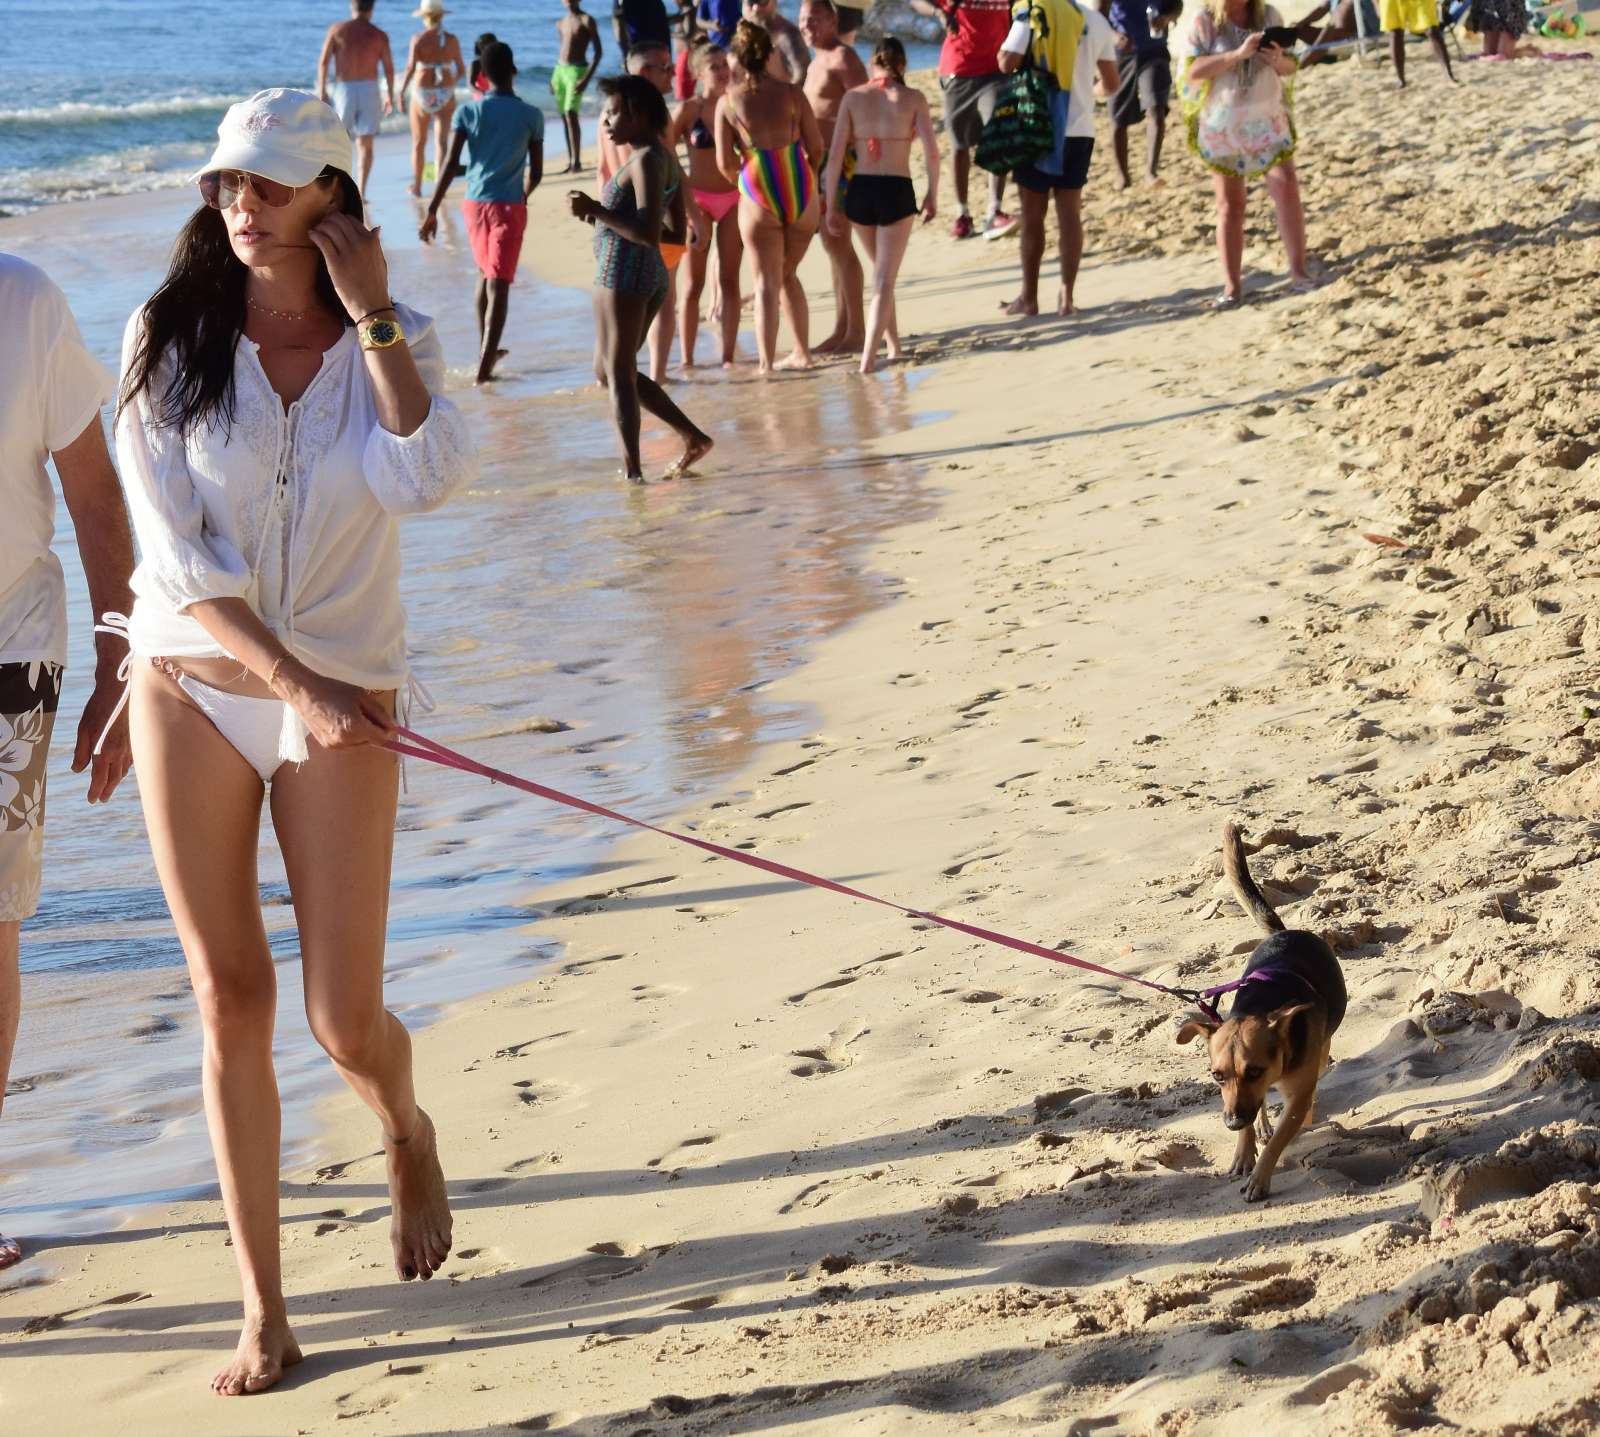 Lauren Silverman in White Bikini â€“ Walking her dog at a beach in Barbados